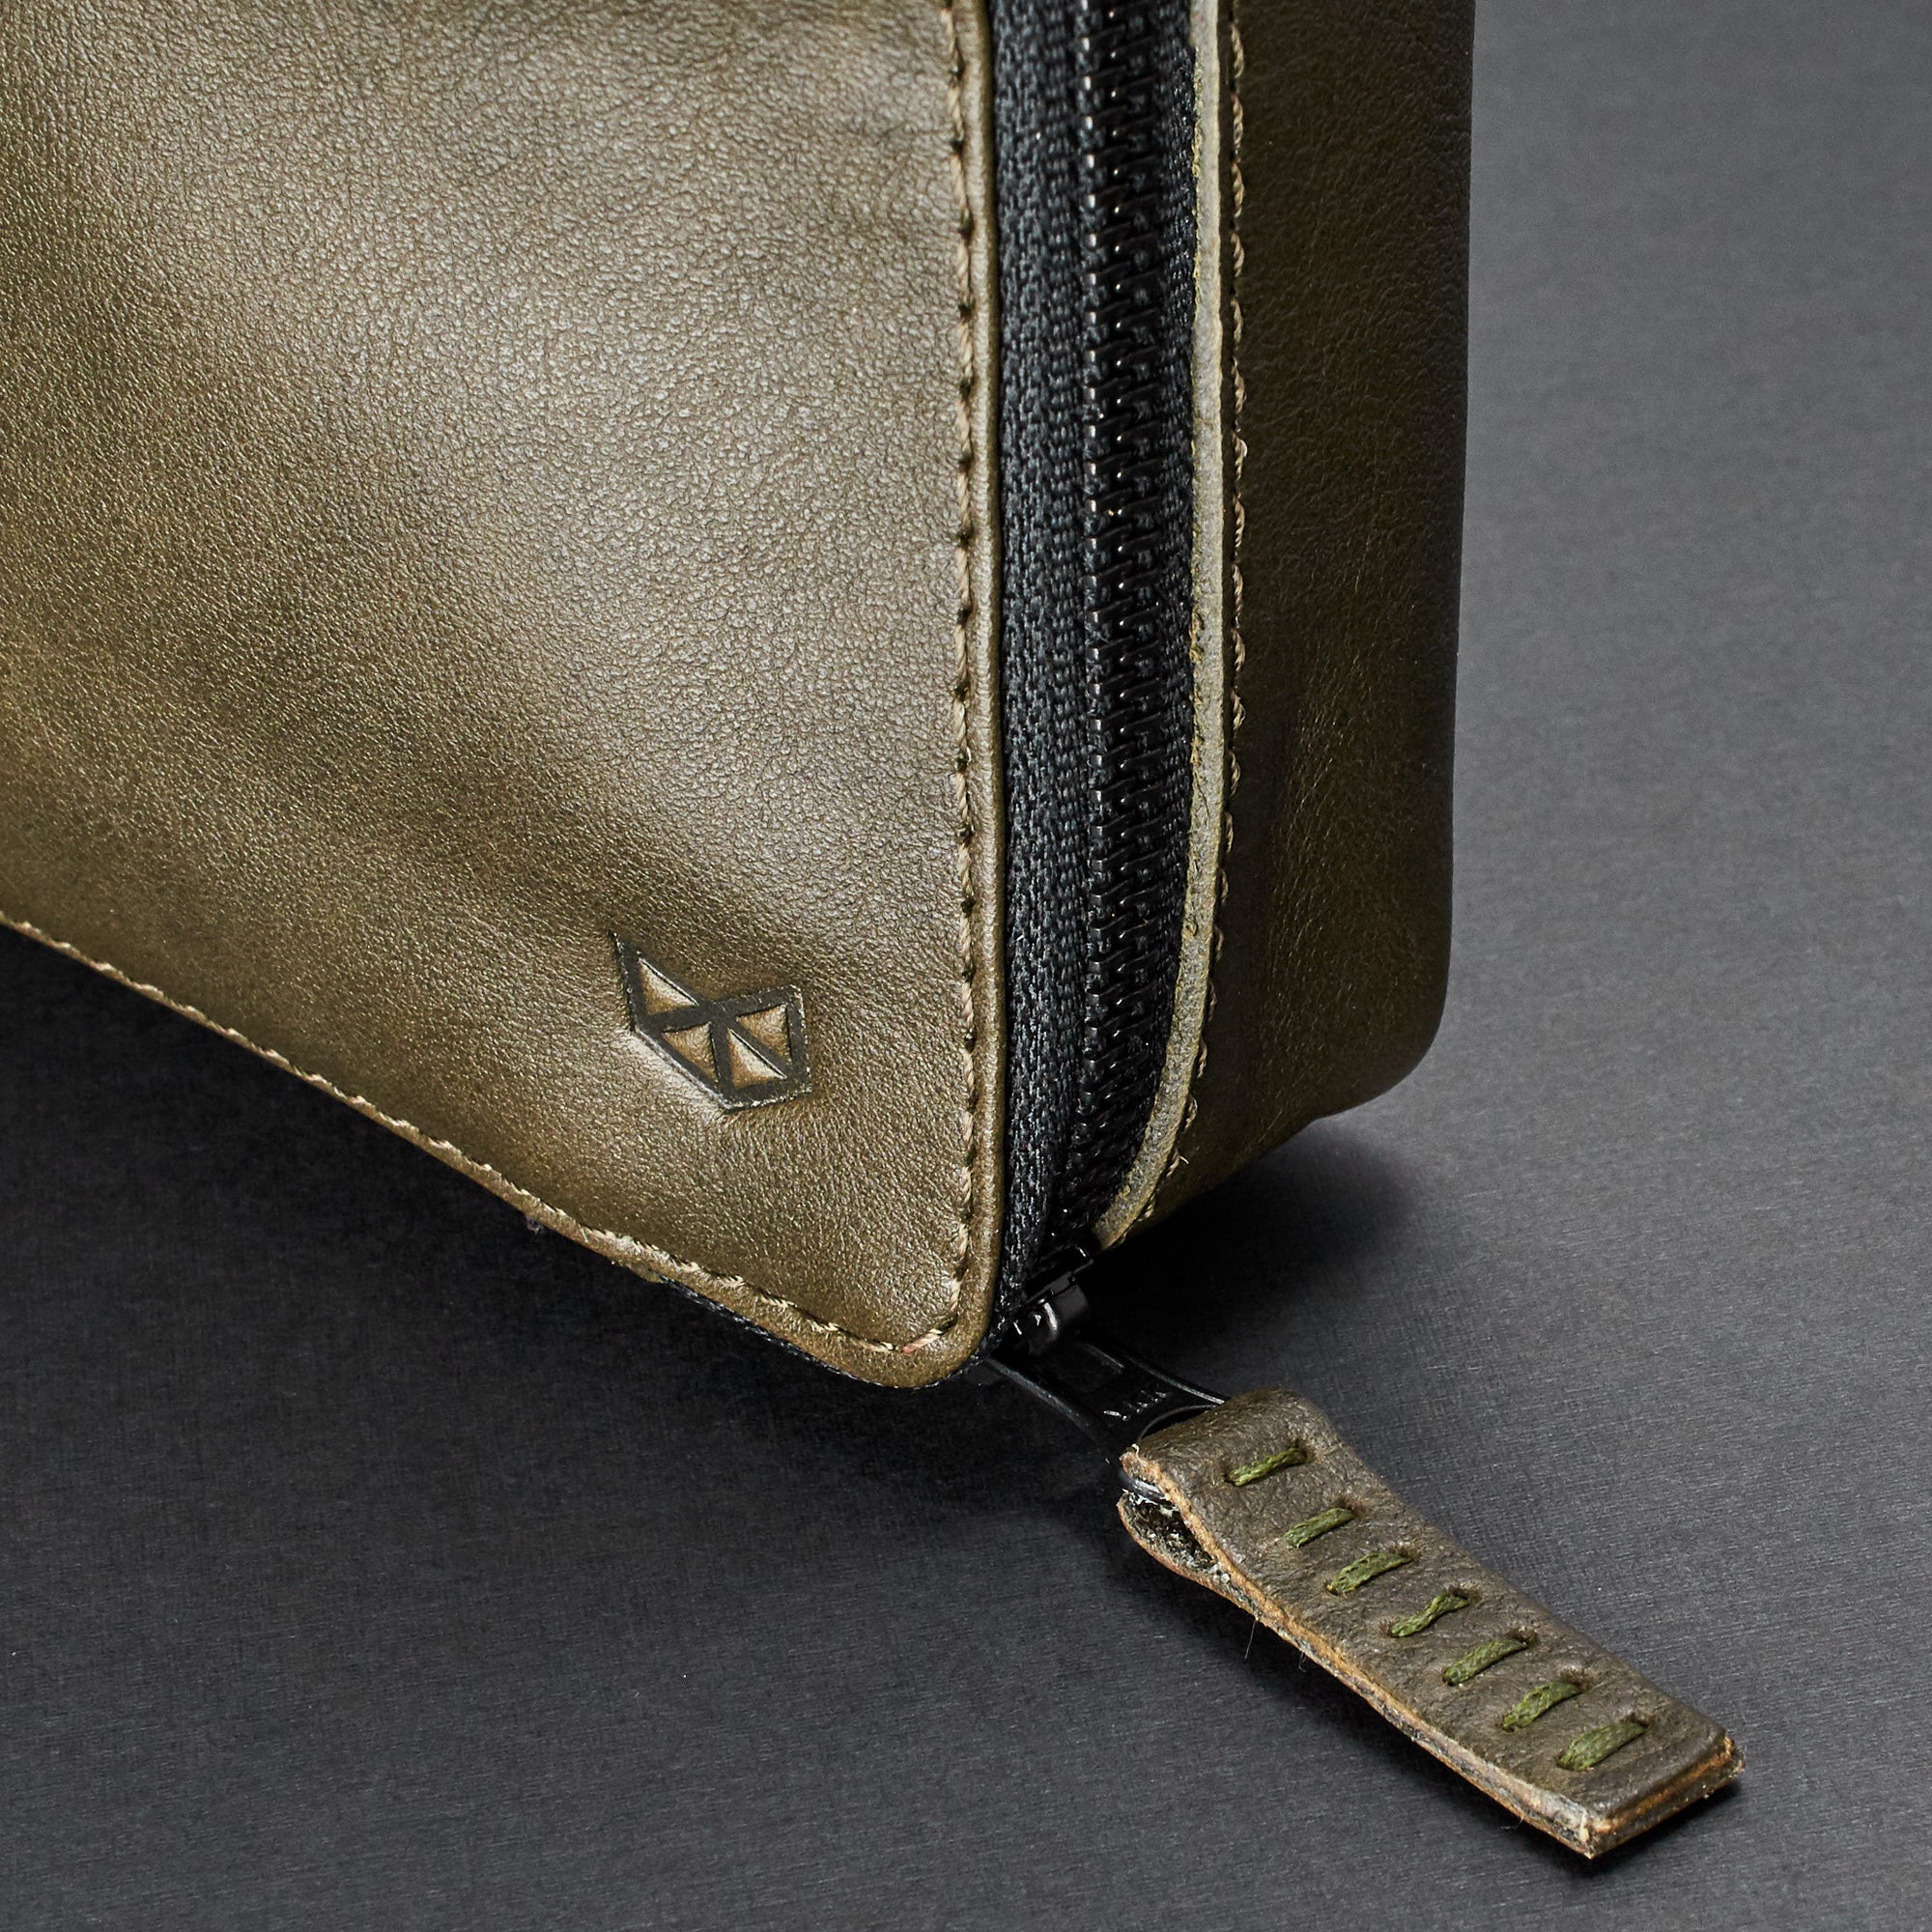 YKK metallic zippers. Handmade green travel gadget organizer by Capra Leather